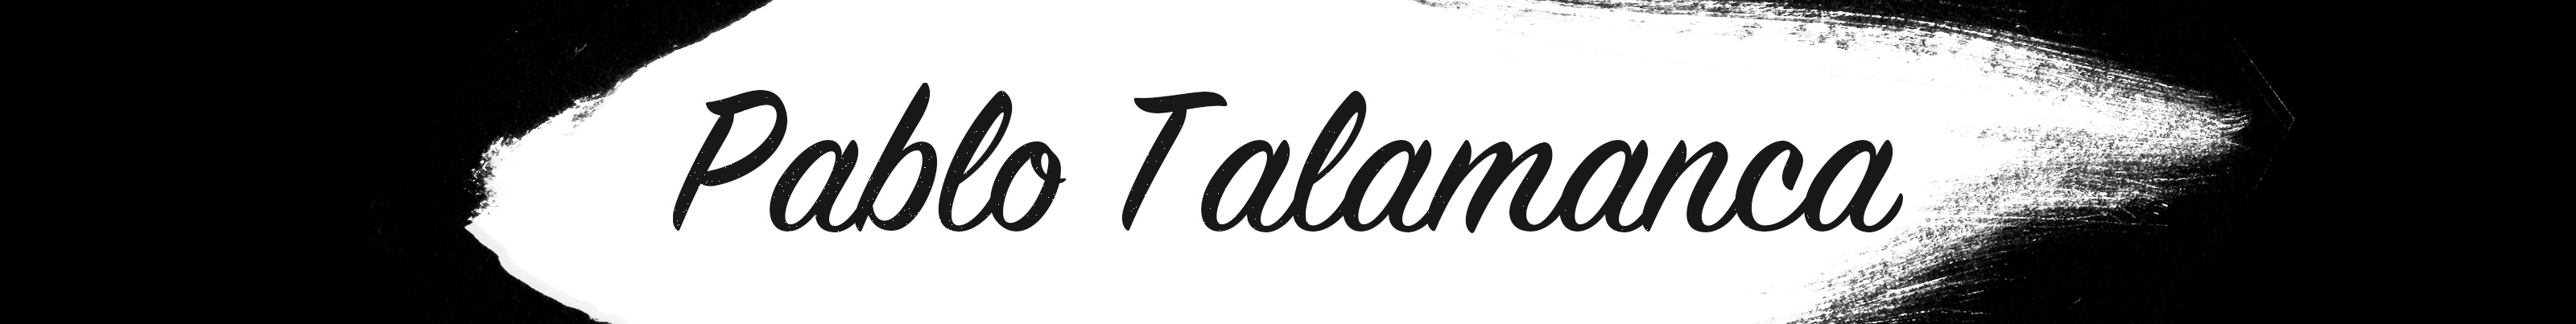 Pablo Talamanca's profile banner